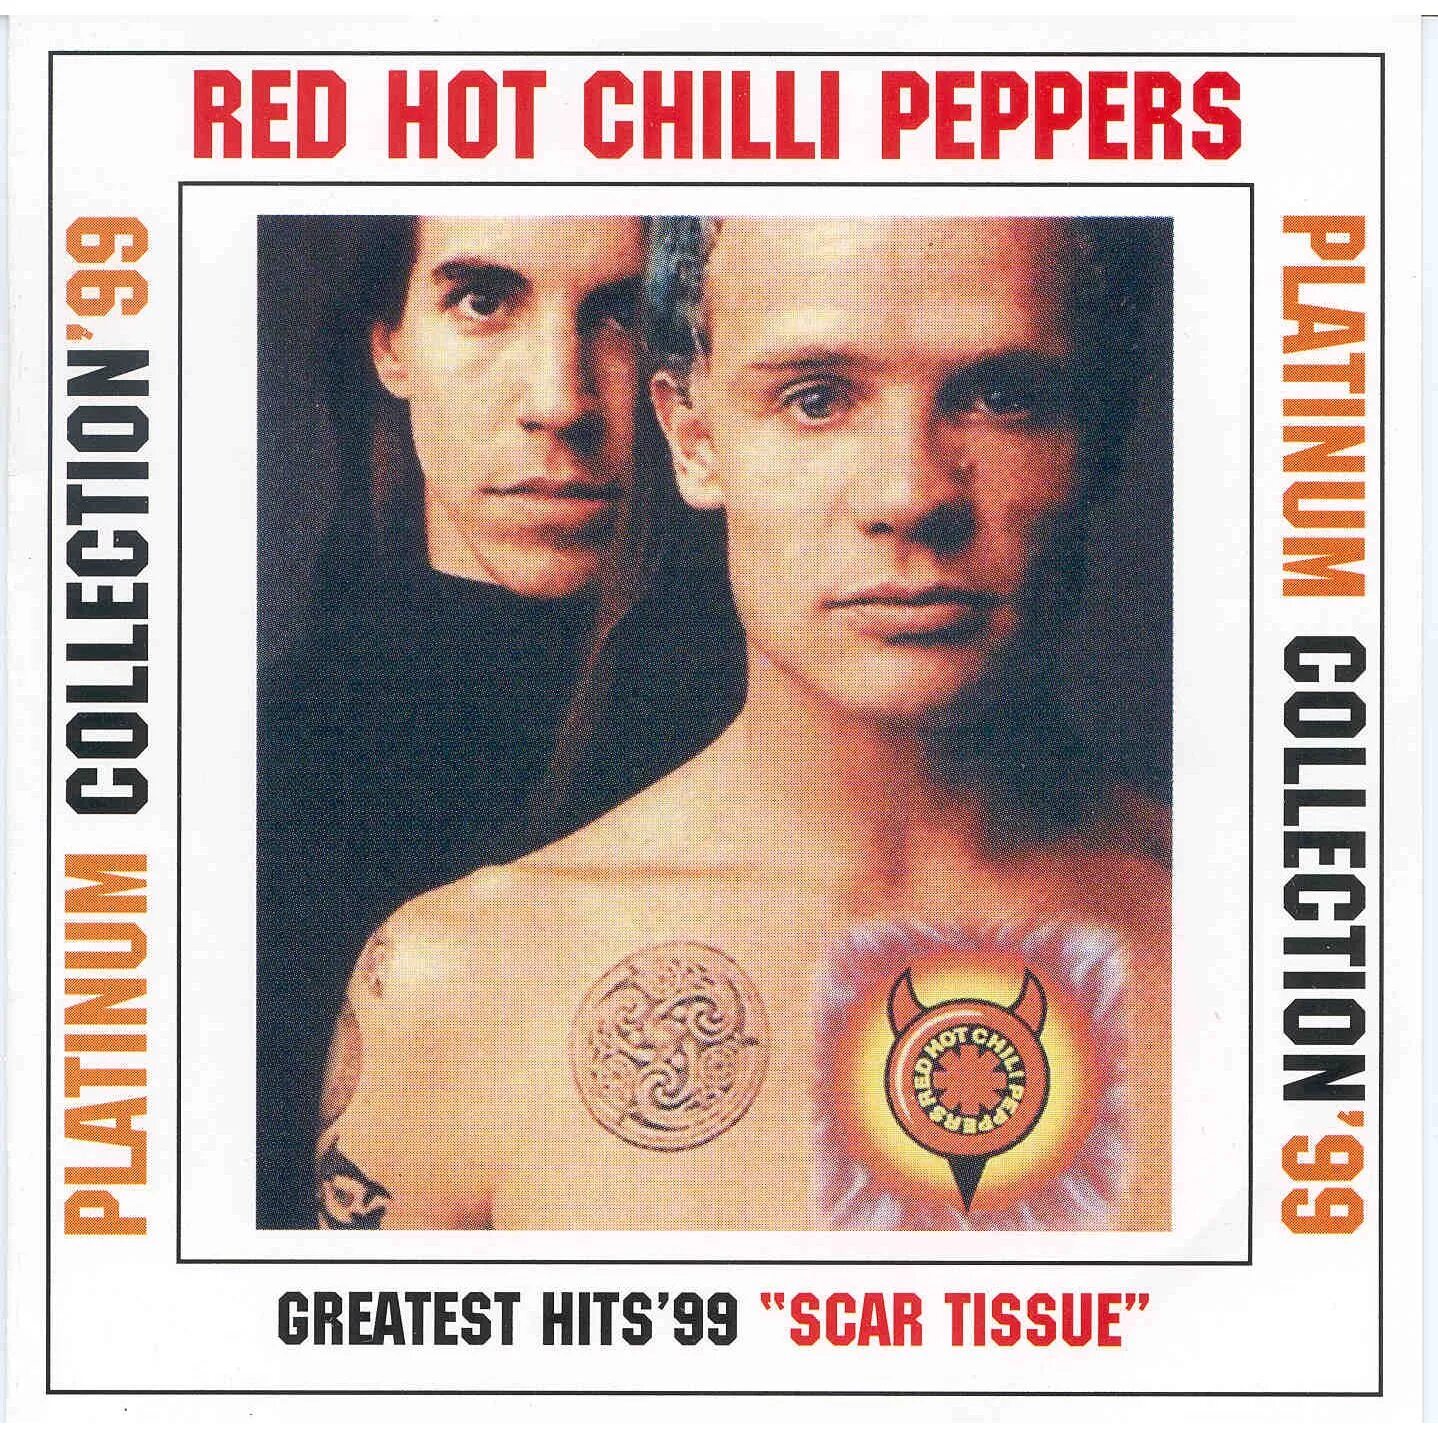 Red hot chili peppers dark. Ред хот Чили Пепперс. Red hot Chili Peppers обложка. Red hot Chili Peppers альбомы. RHCP обложки альбомов.